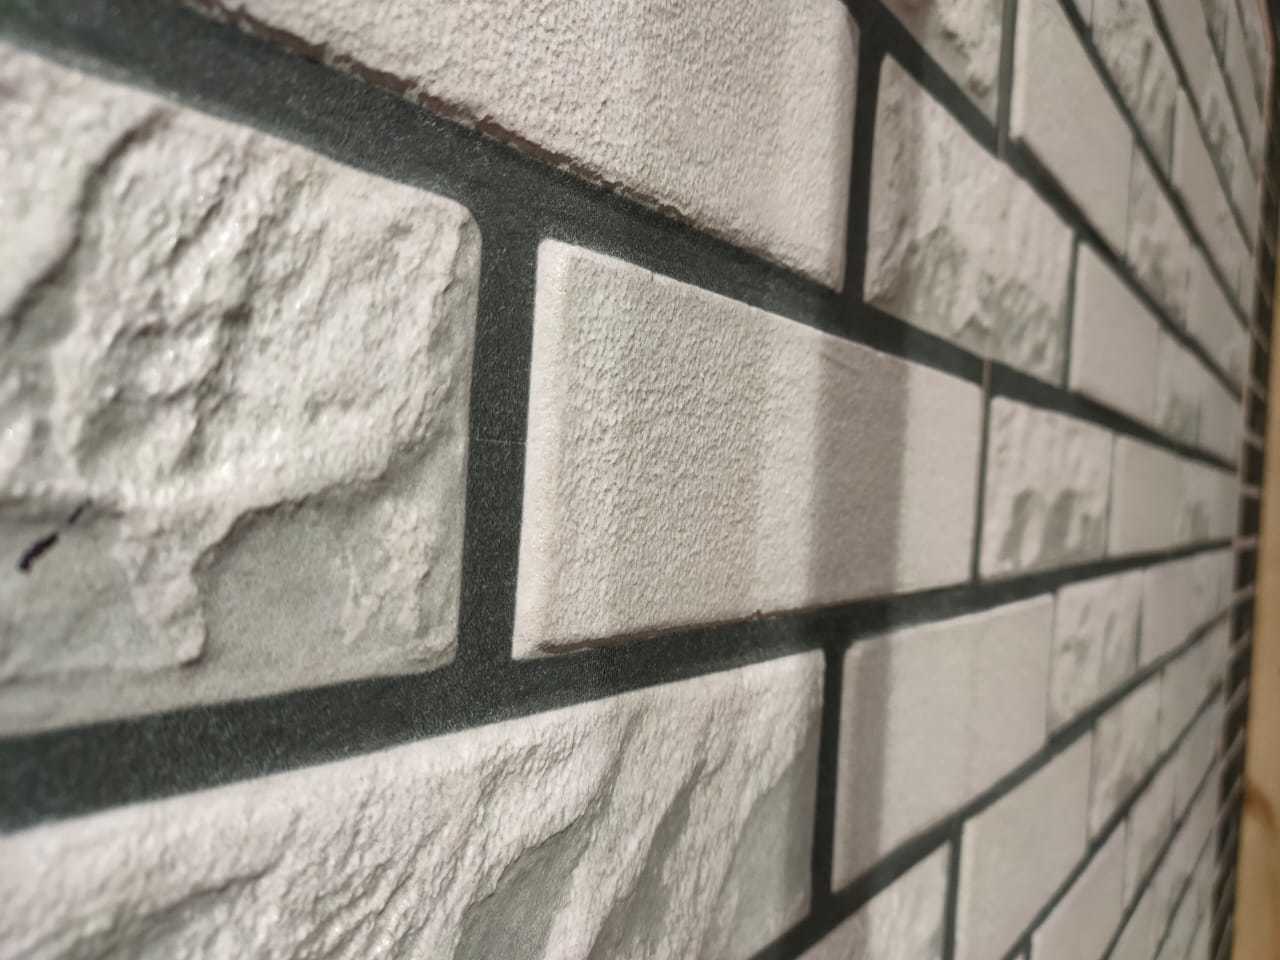 30x45 cm Ceramic Wall Tiles Exporter